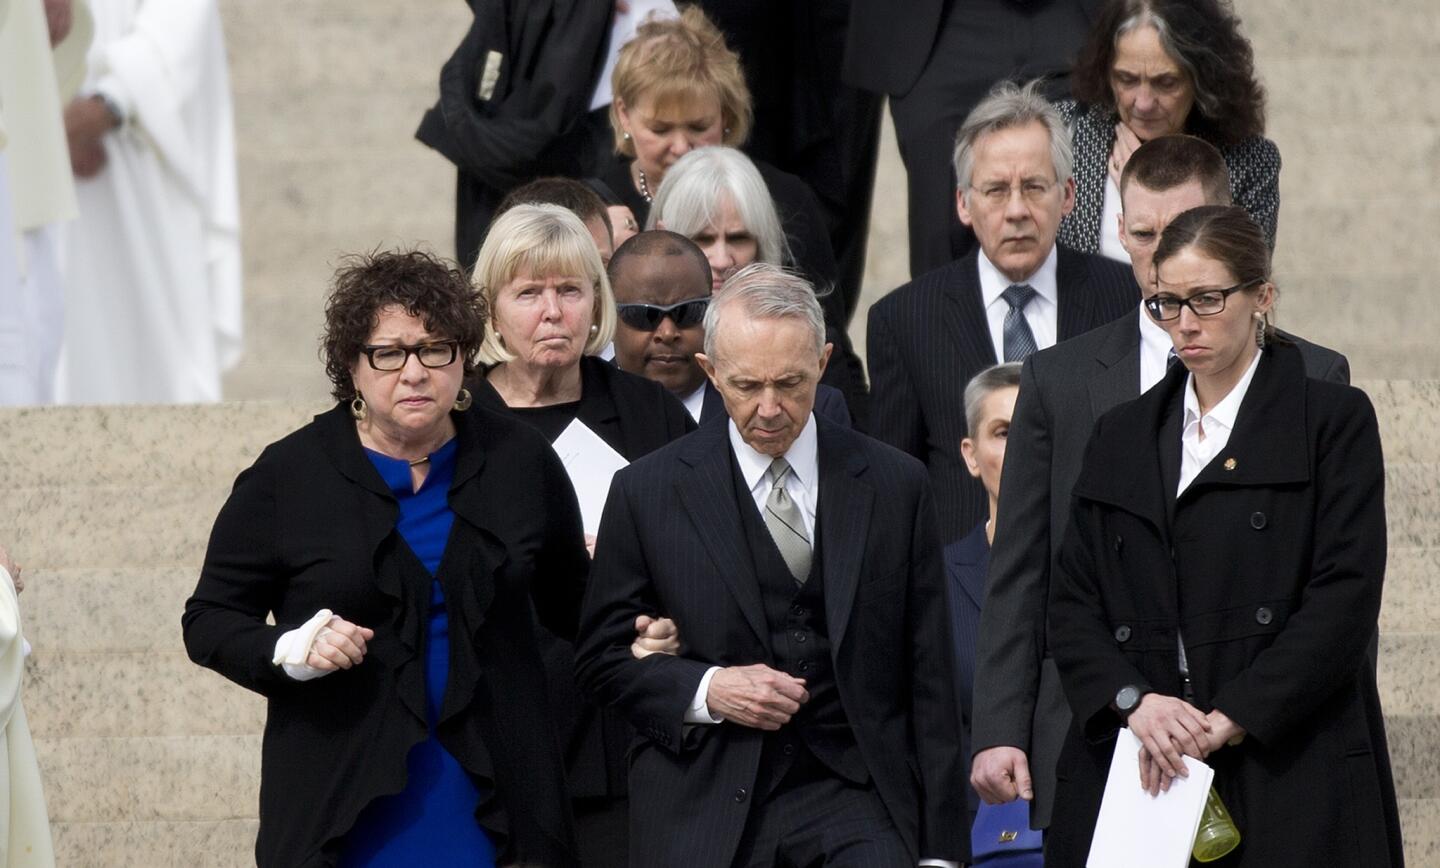 Justice Antonin Scalia's funeral